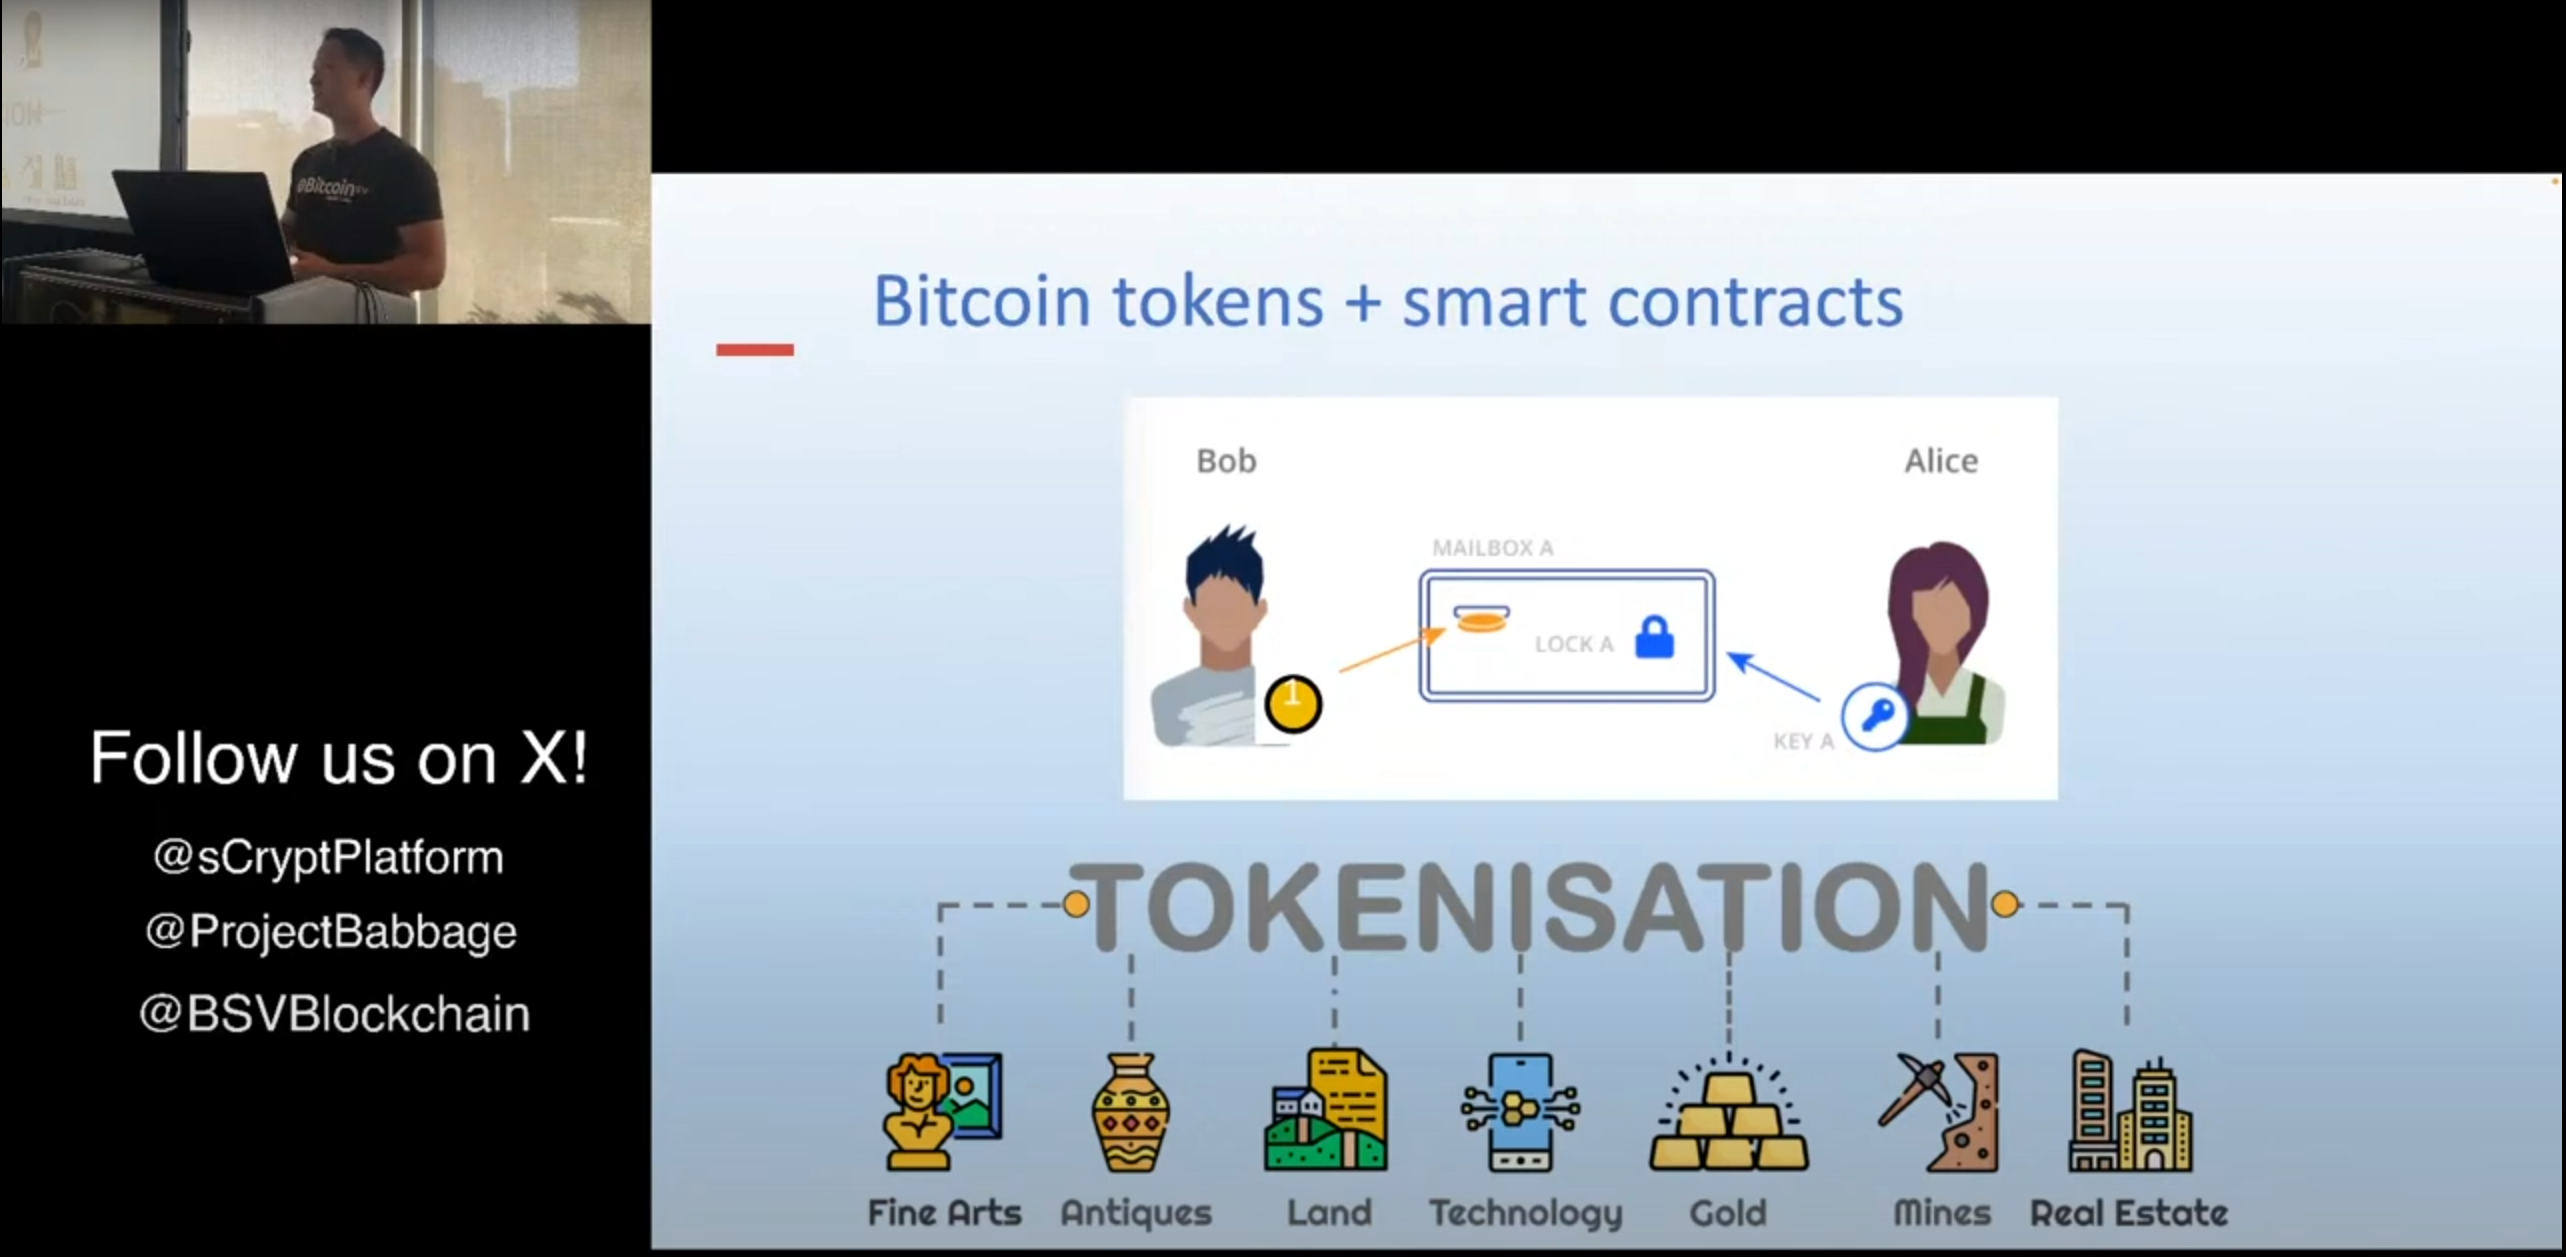 Tokenisation presentation screenshot